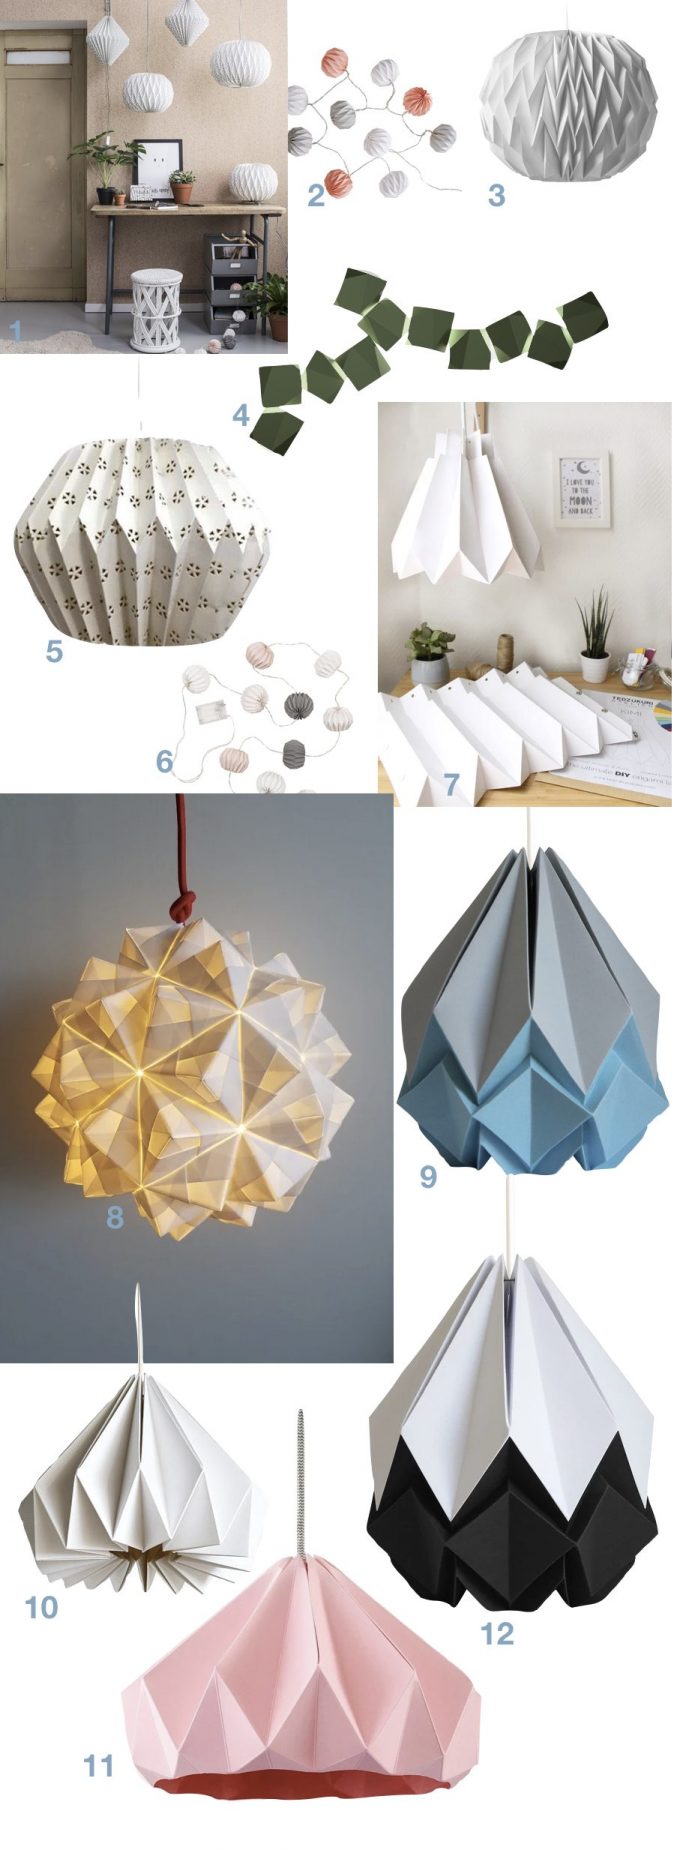 tuto lampe origami fait main diy blog deco clemaroundthecorner.001